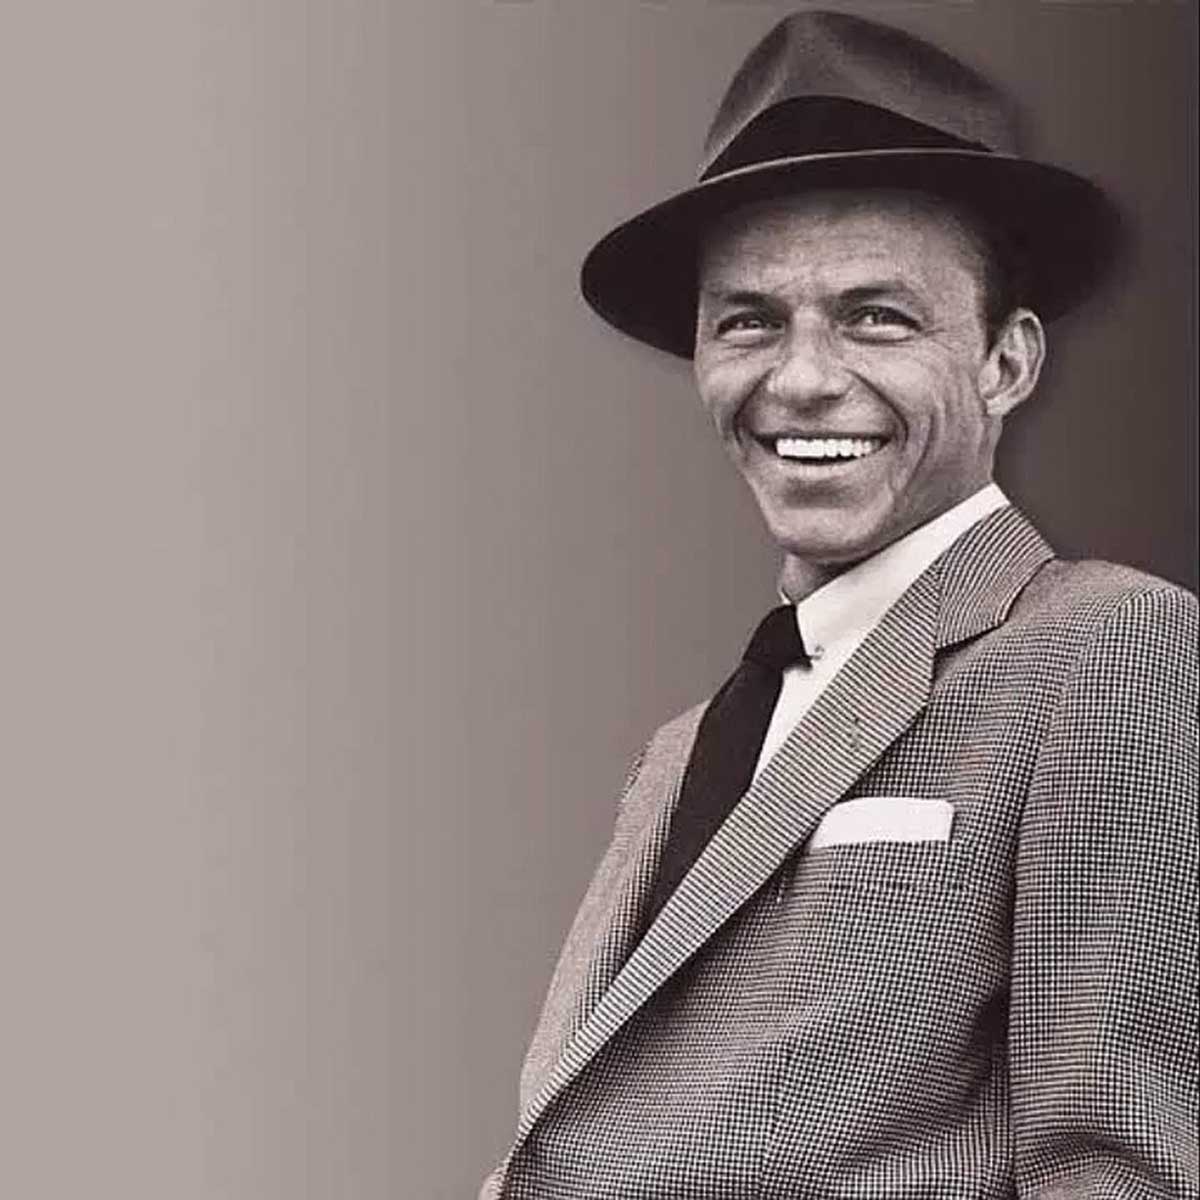 Strangers In The Night Sheet Music, Frank Sinatra